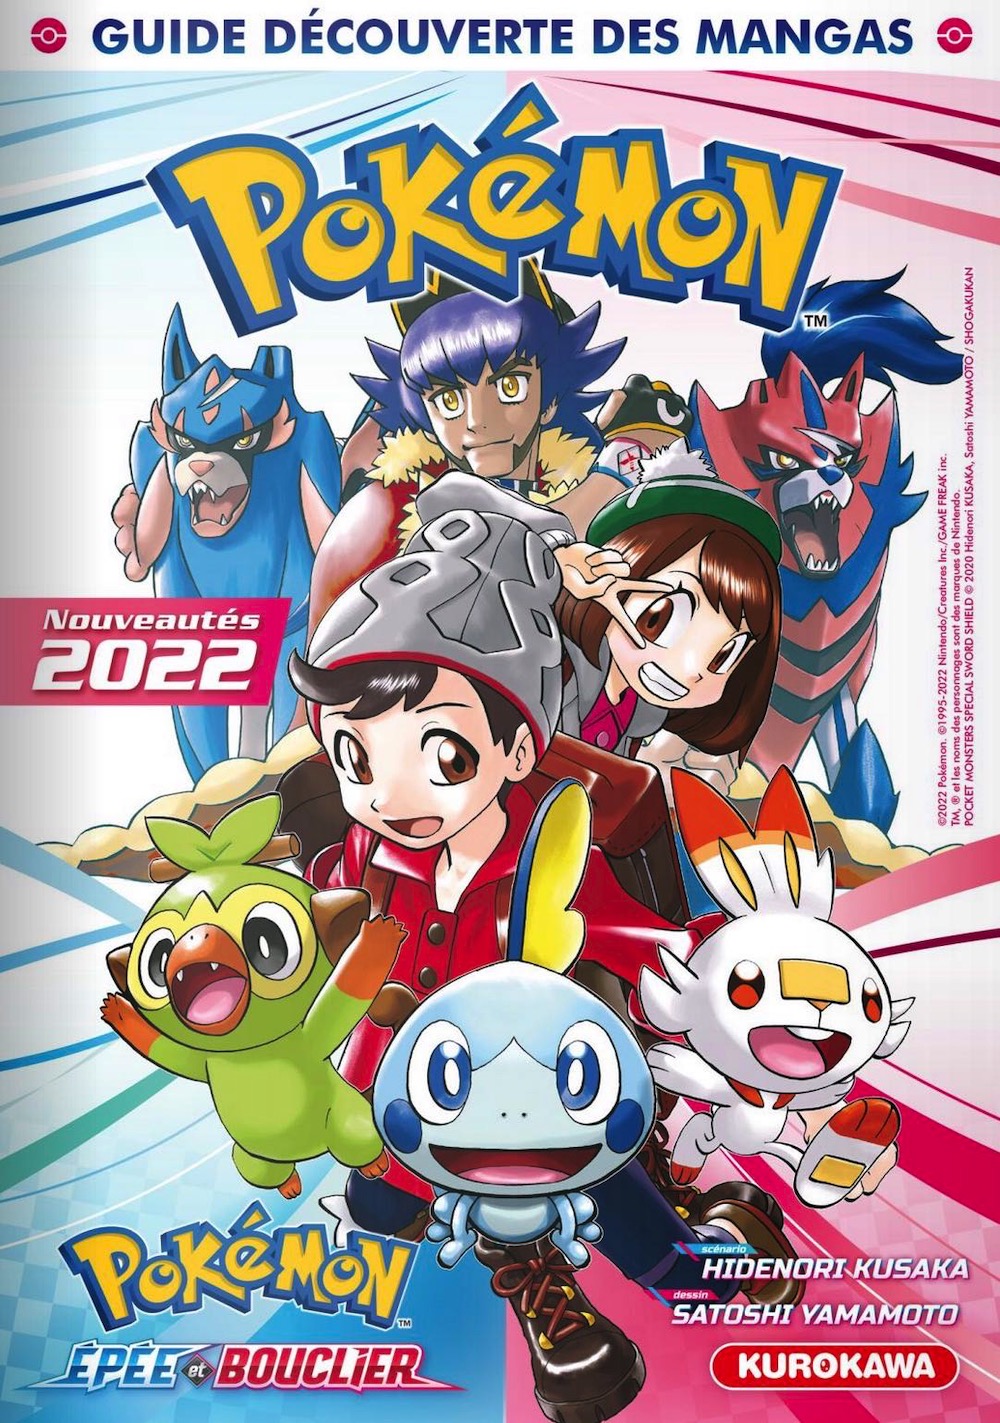 Pokemon-Guide22-1_1_1000x1423.jpg